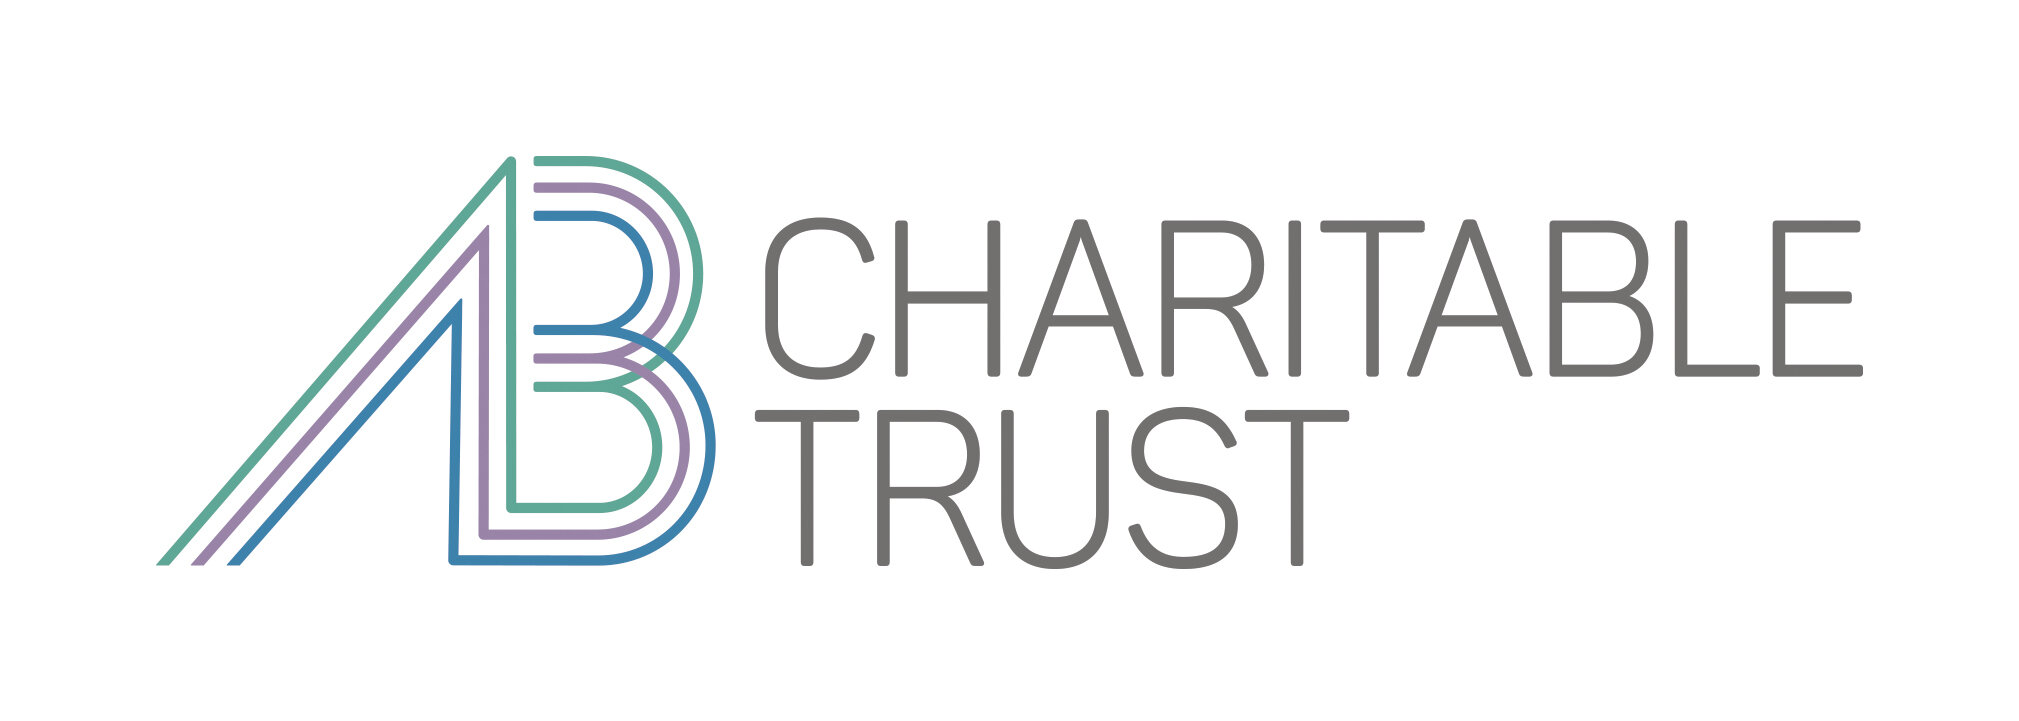 AB Charitable Trust Logo_RGB.jpg